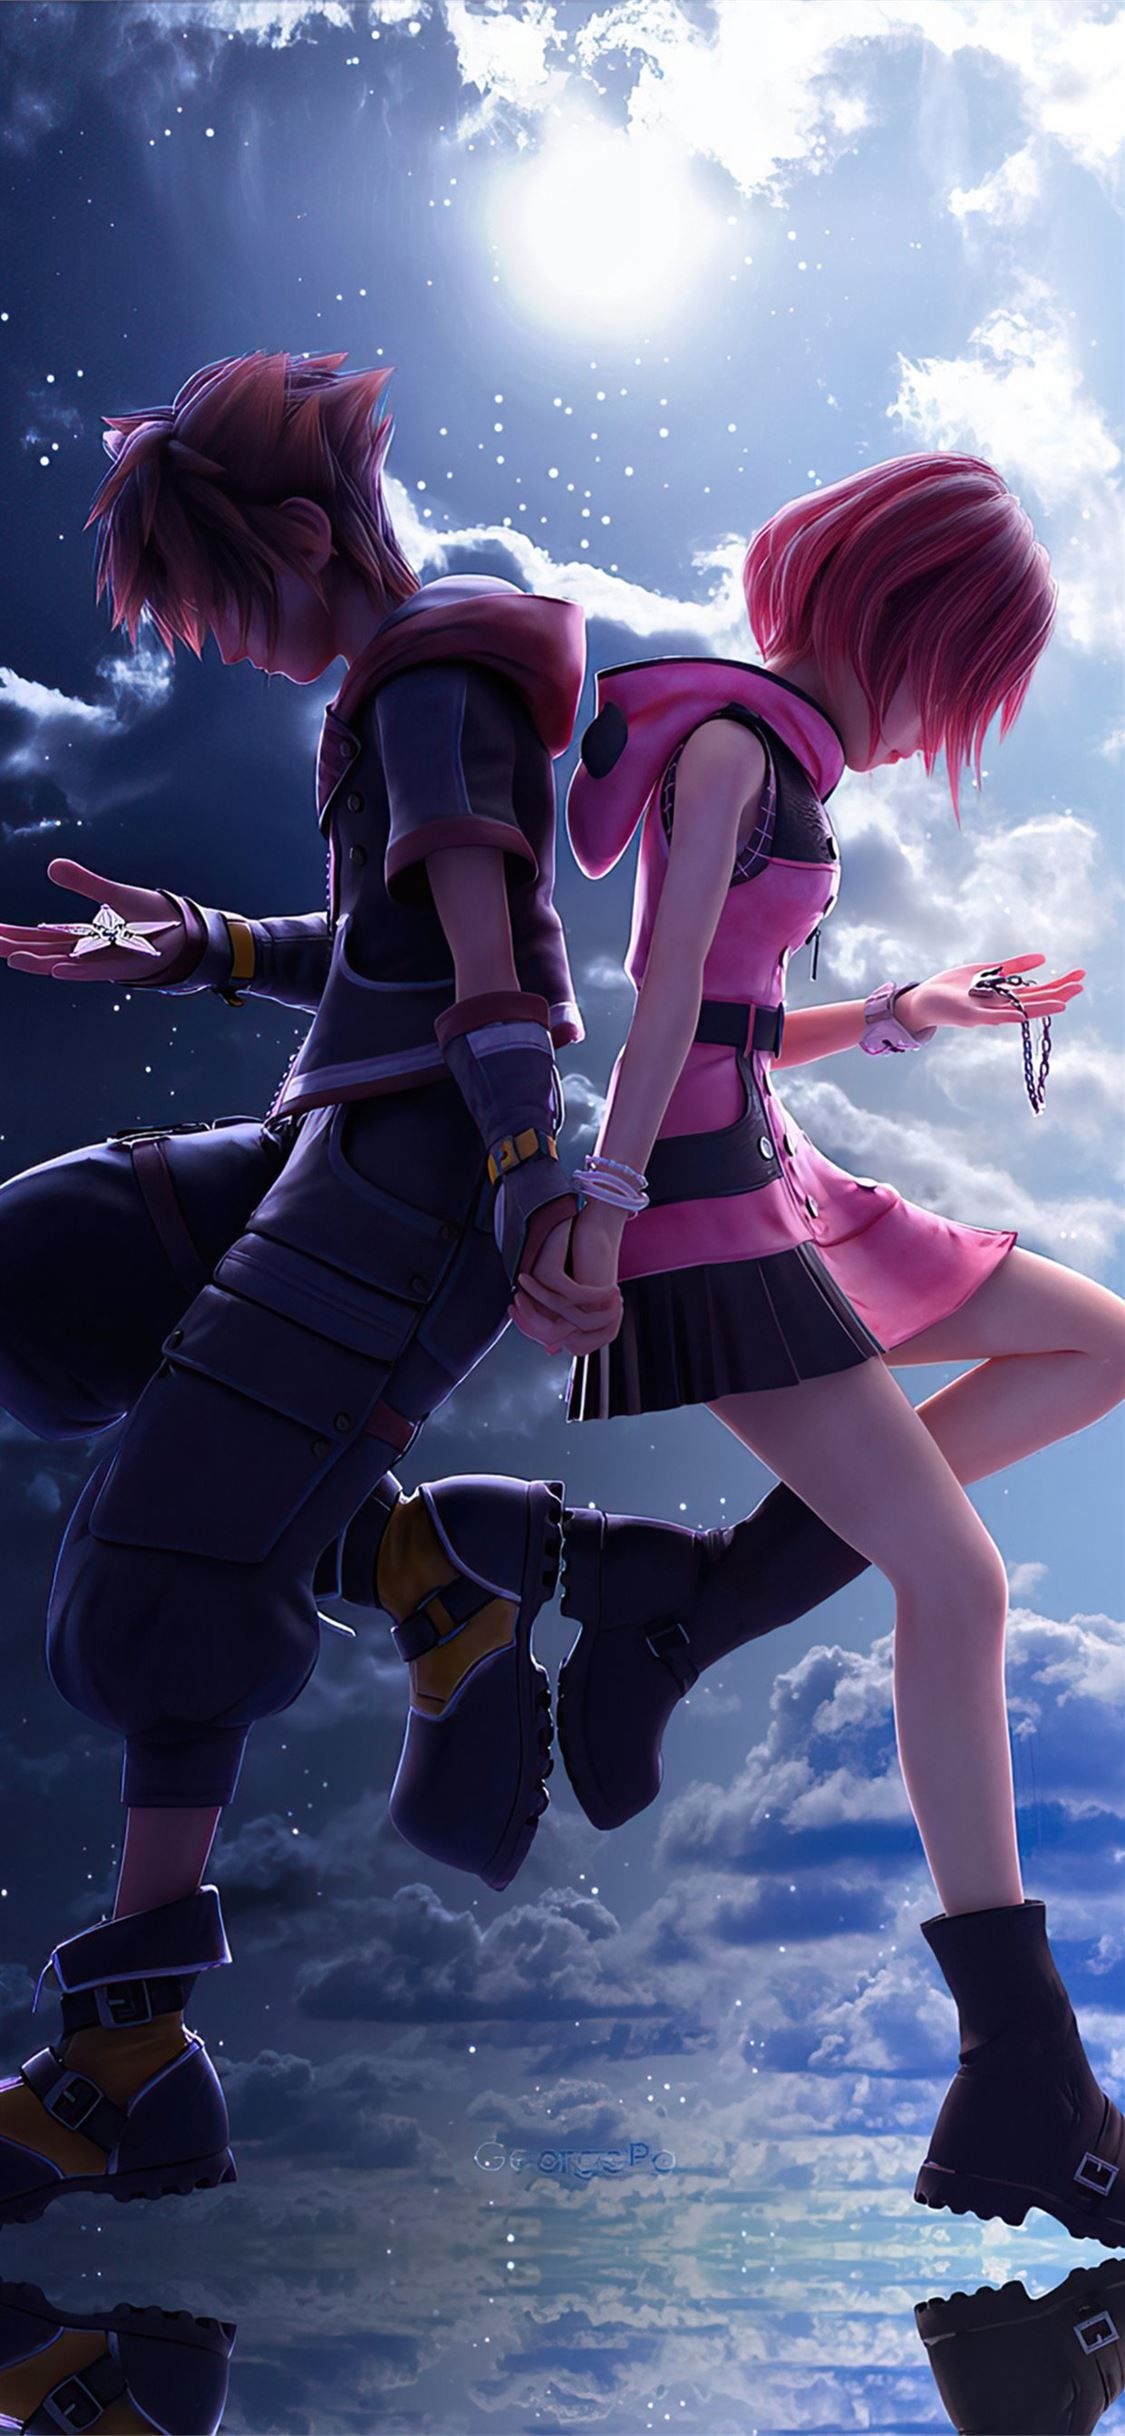 Kairi kingdom hearts anime, Beloved video game character, Friendship bonds, Magical worlds, 1130x2440 HD Phone